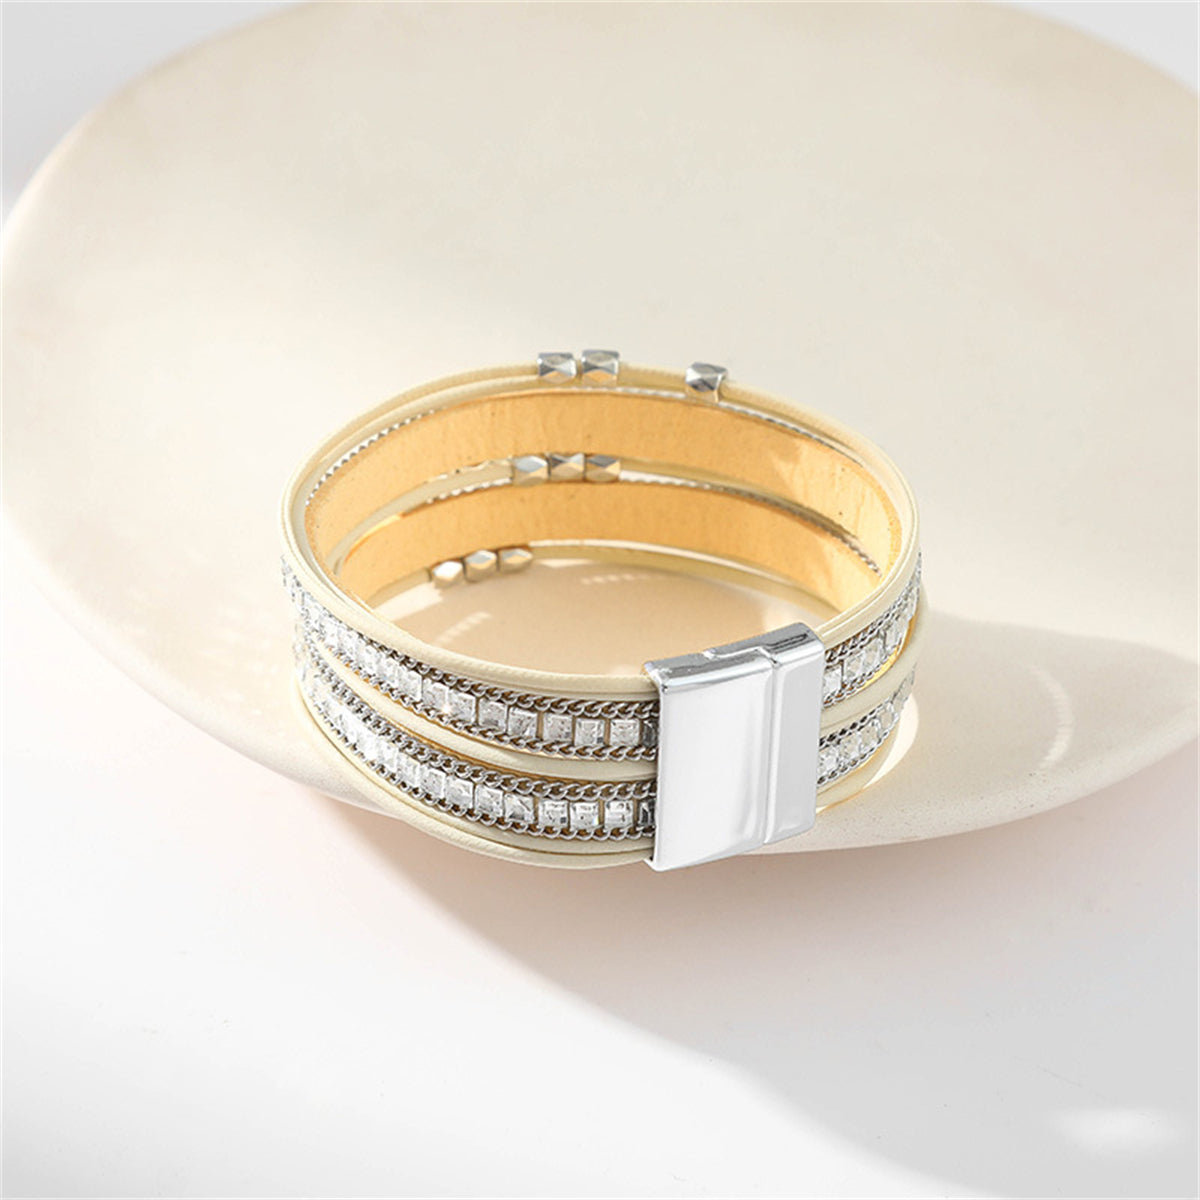 Beige Polystyrene & Silver-Plated Multi-Strand Bracelet